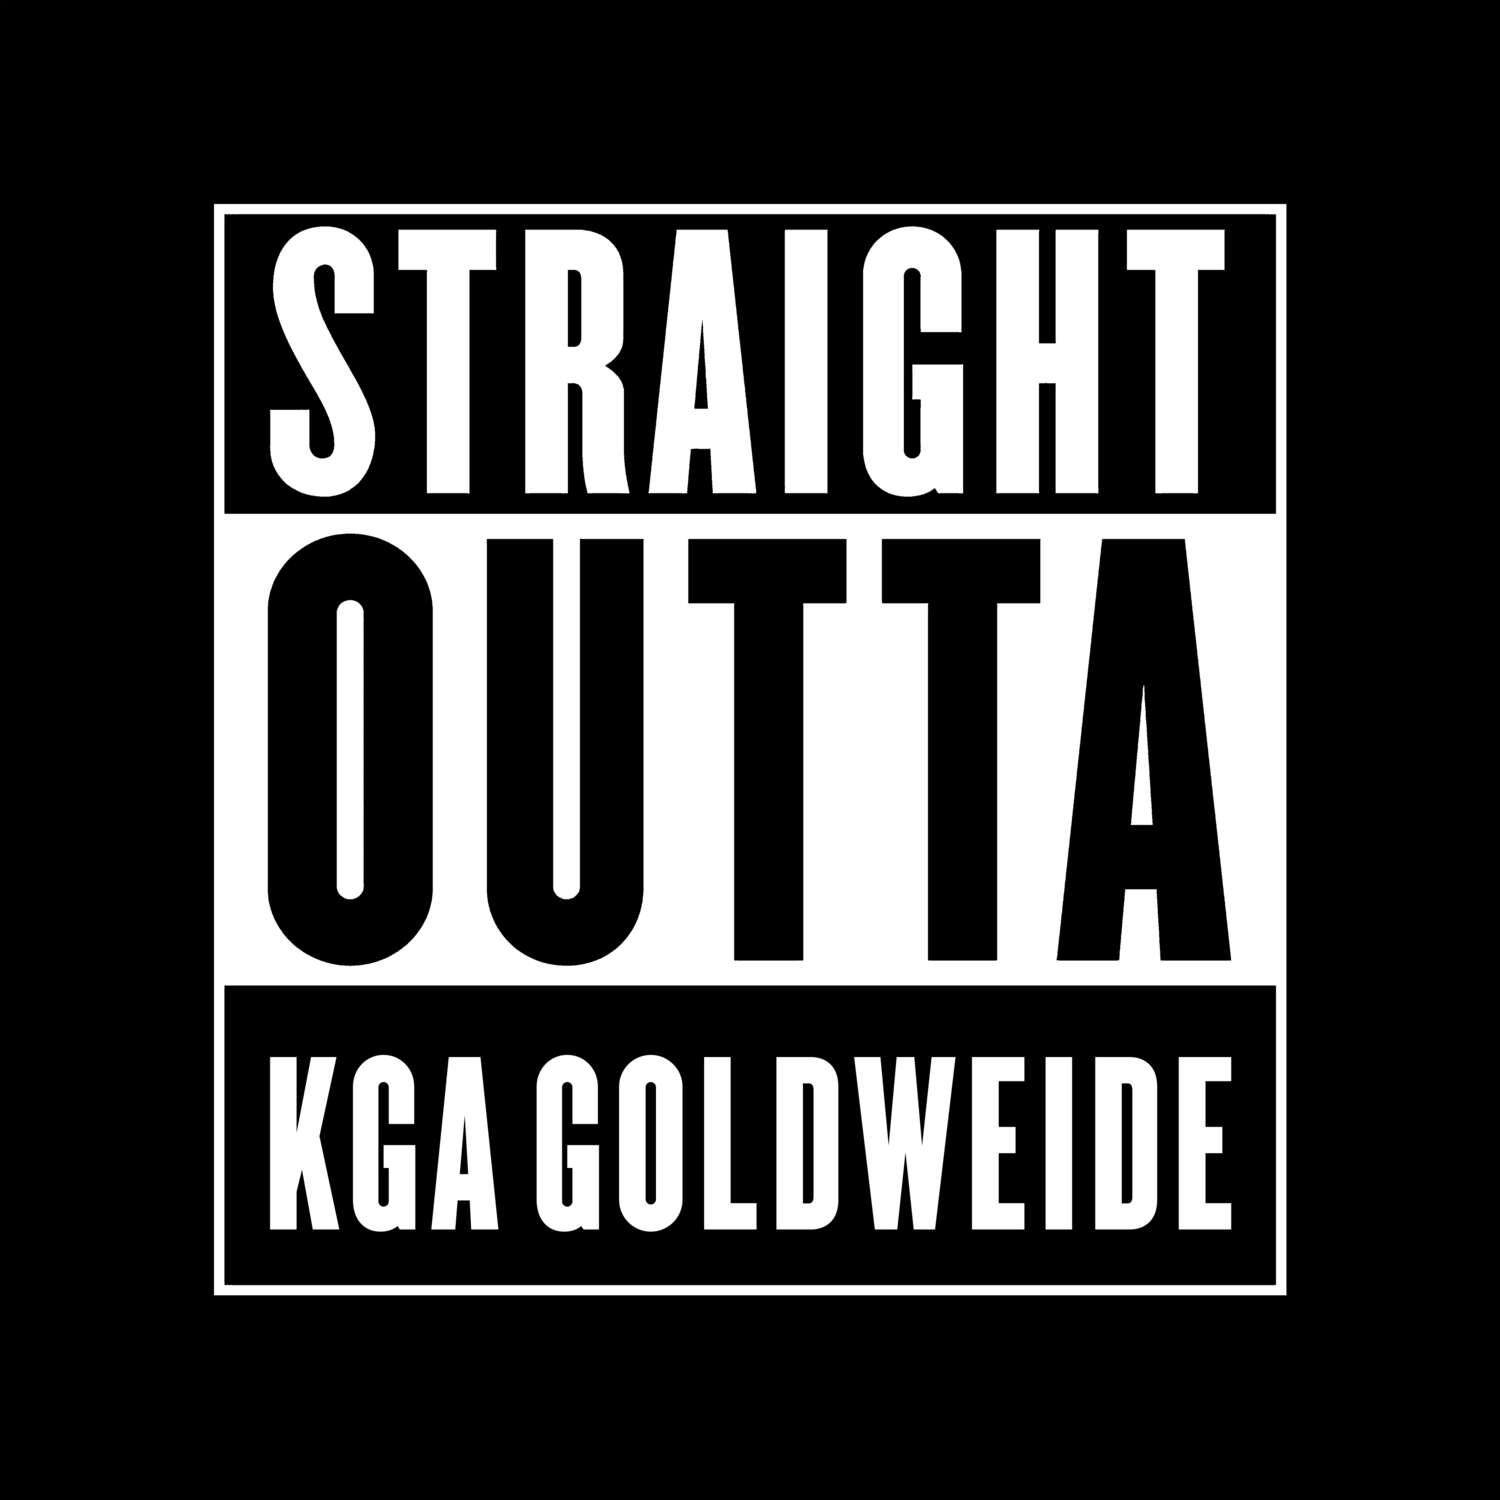 KGA Goldweide T-Shirt »Straight Outta«